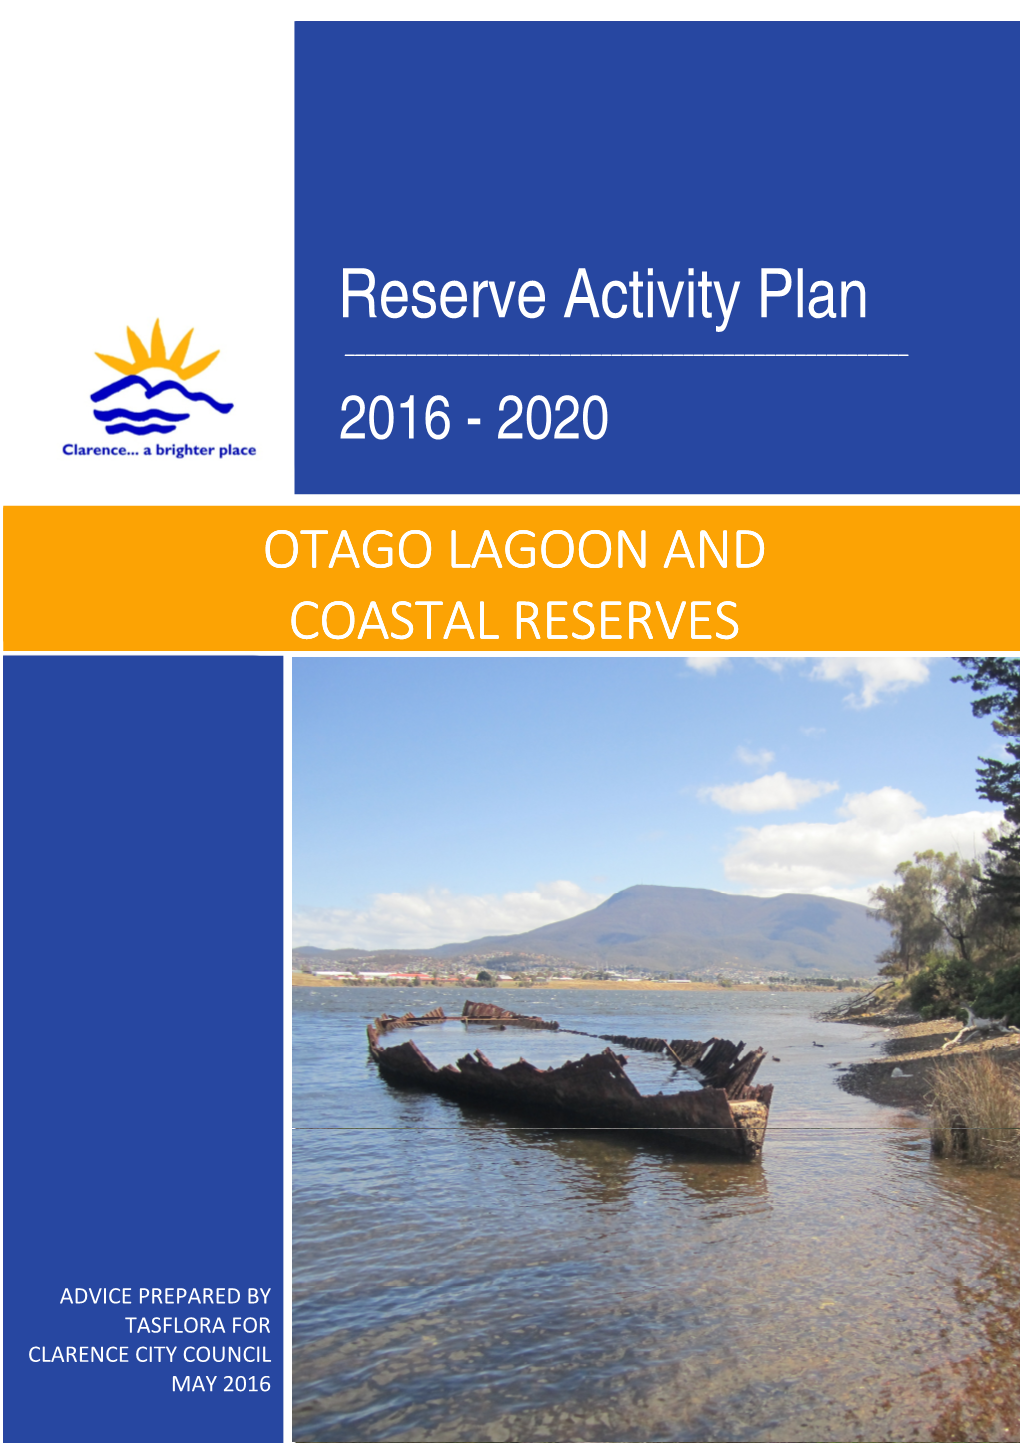 Otago Lagoon and Coastal Reserves Activity Plan 2016